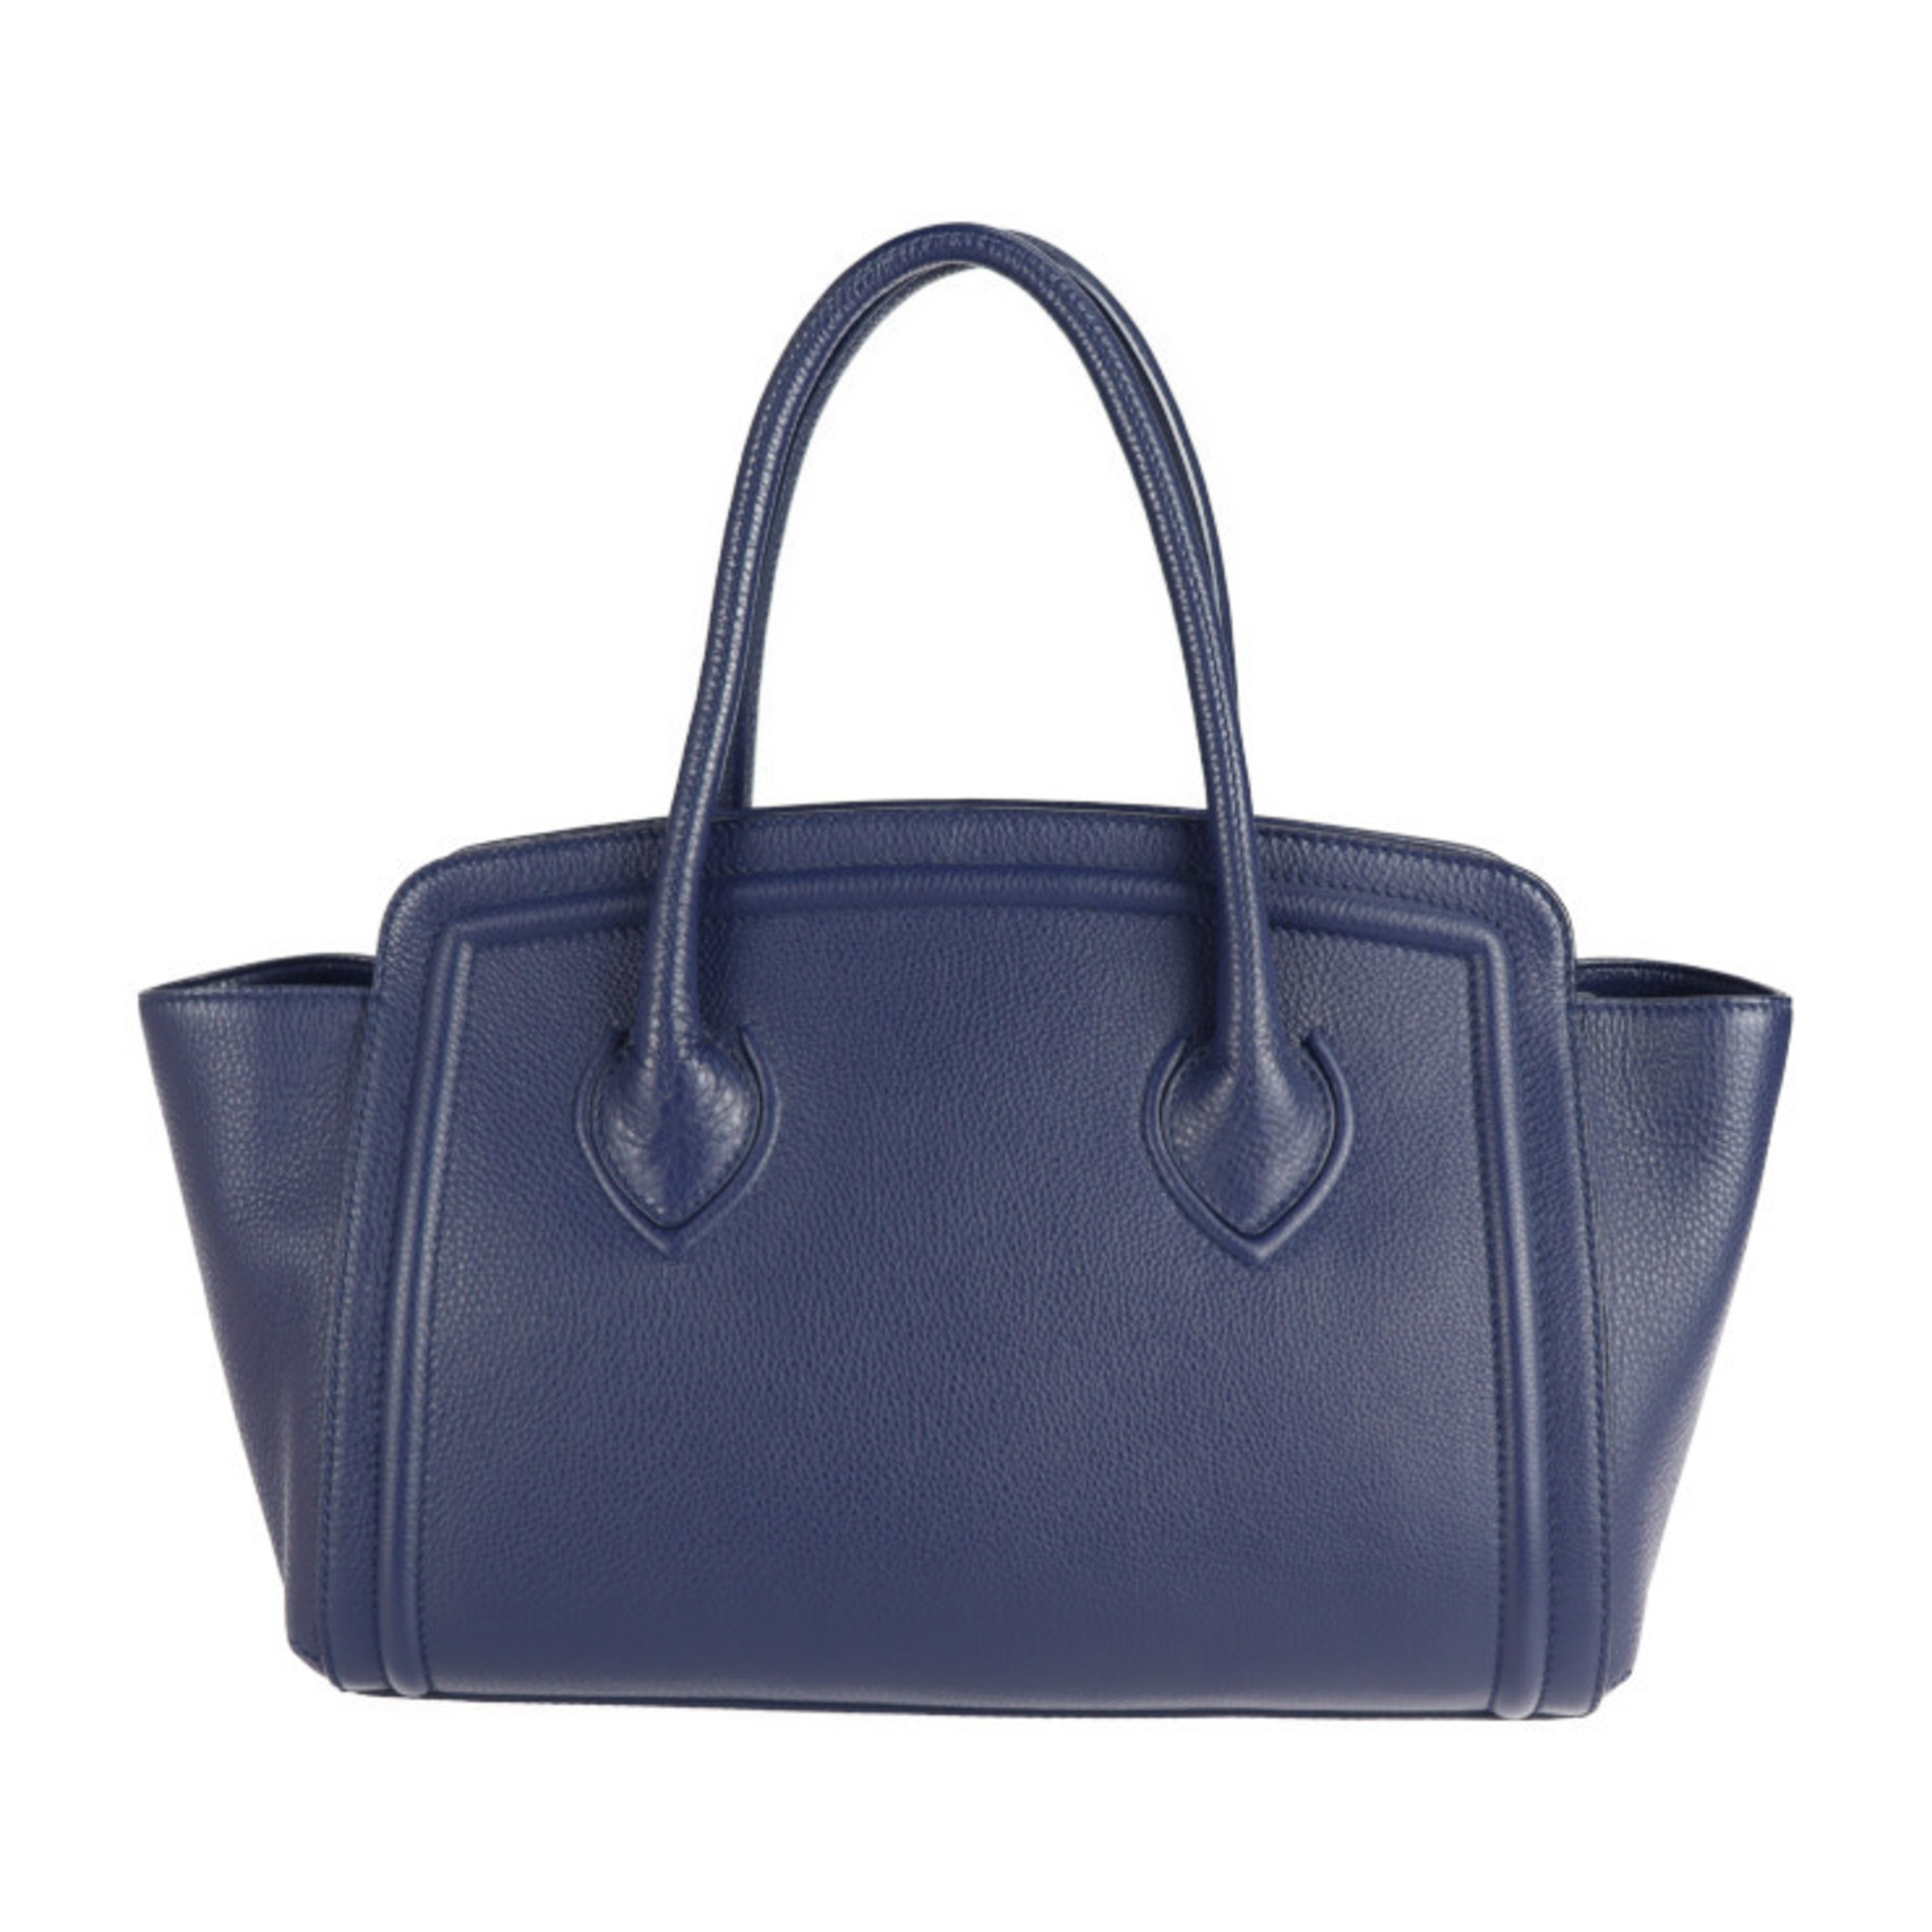 Furla college handbag leather navy tote bag